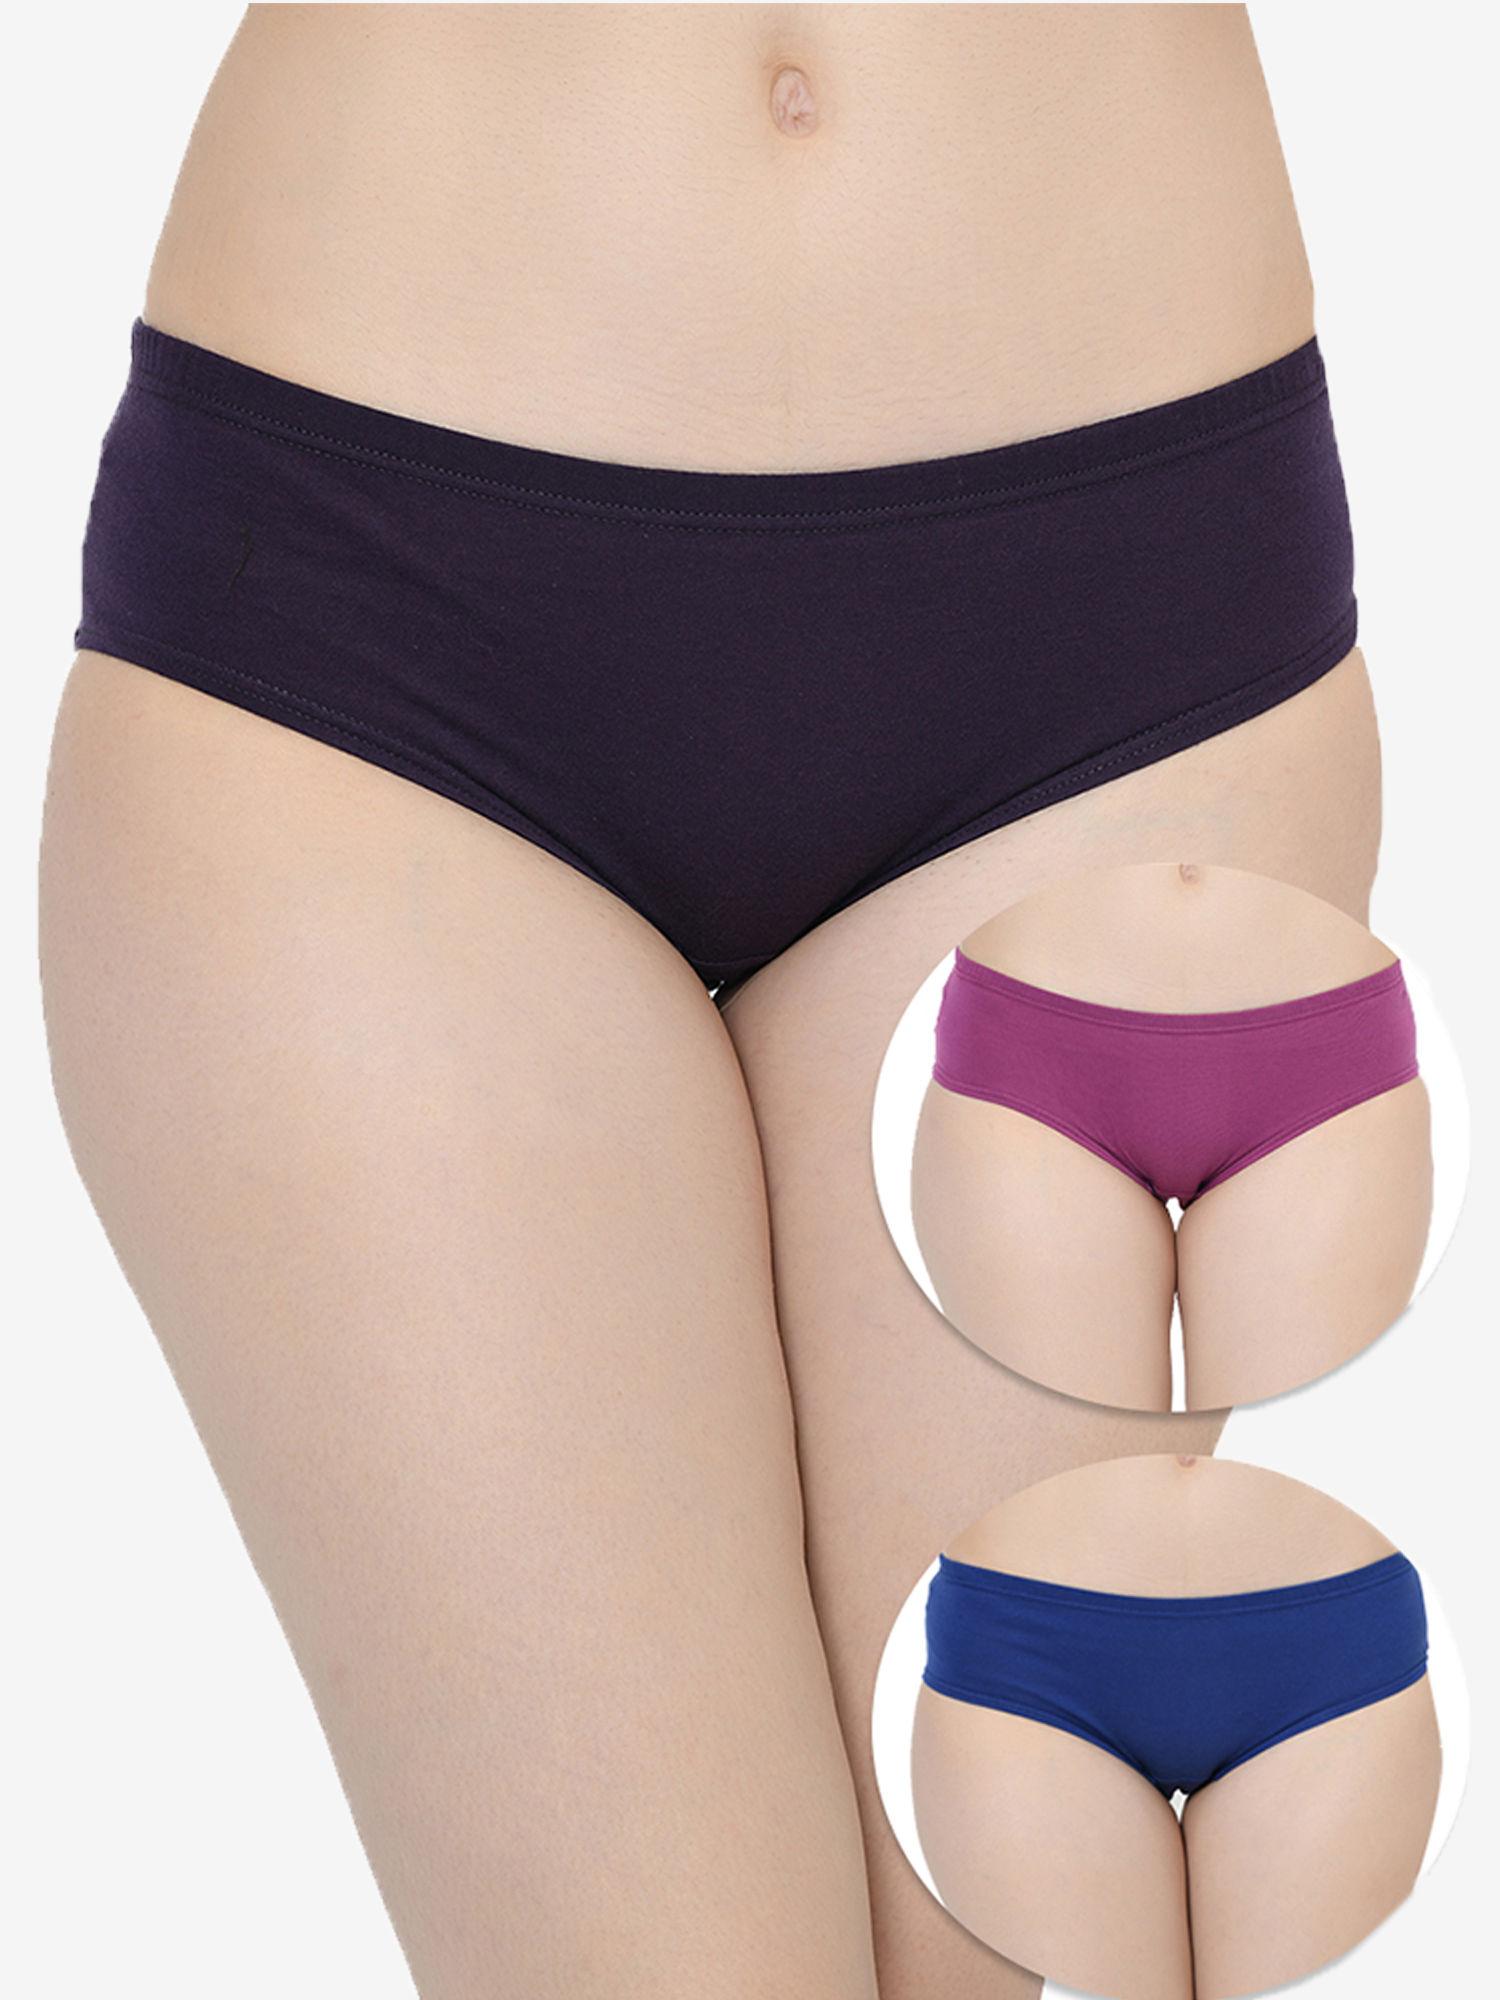 inner elastic panty- pack of 3 - multi-color